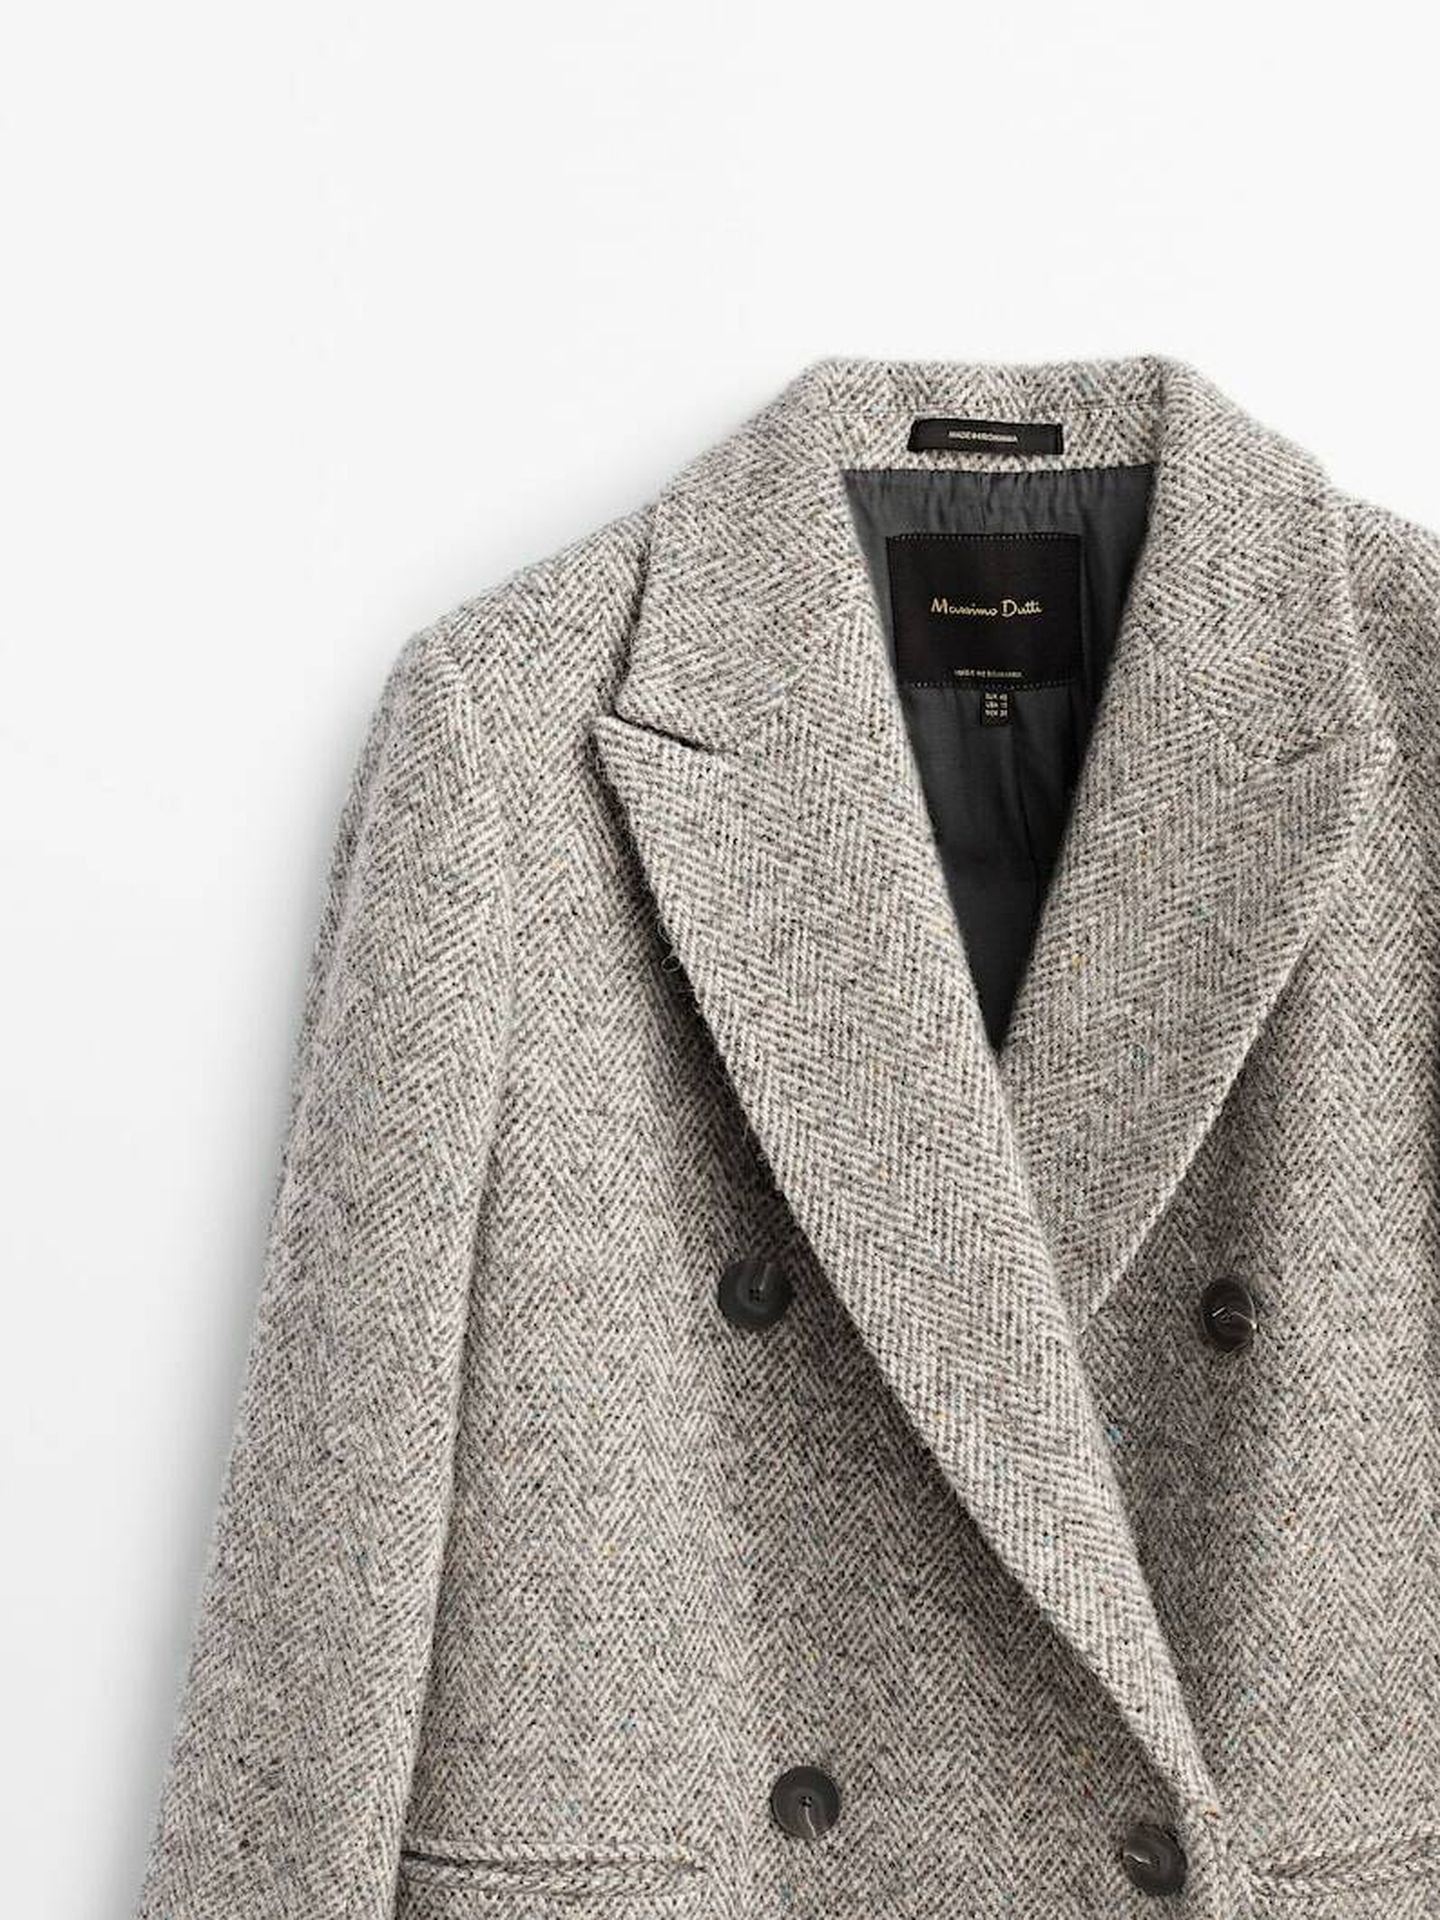 Abrigo gris de lana de Massimo Dutti. (Cortesía)